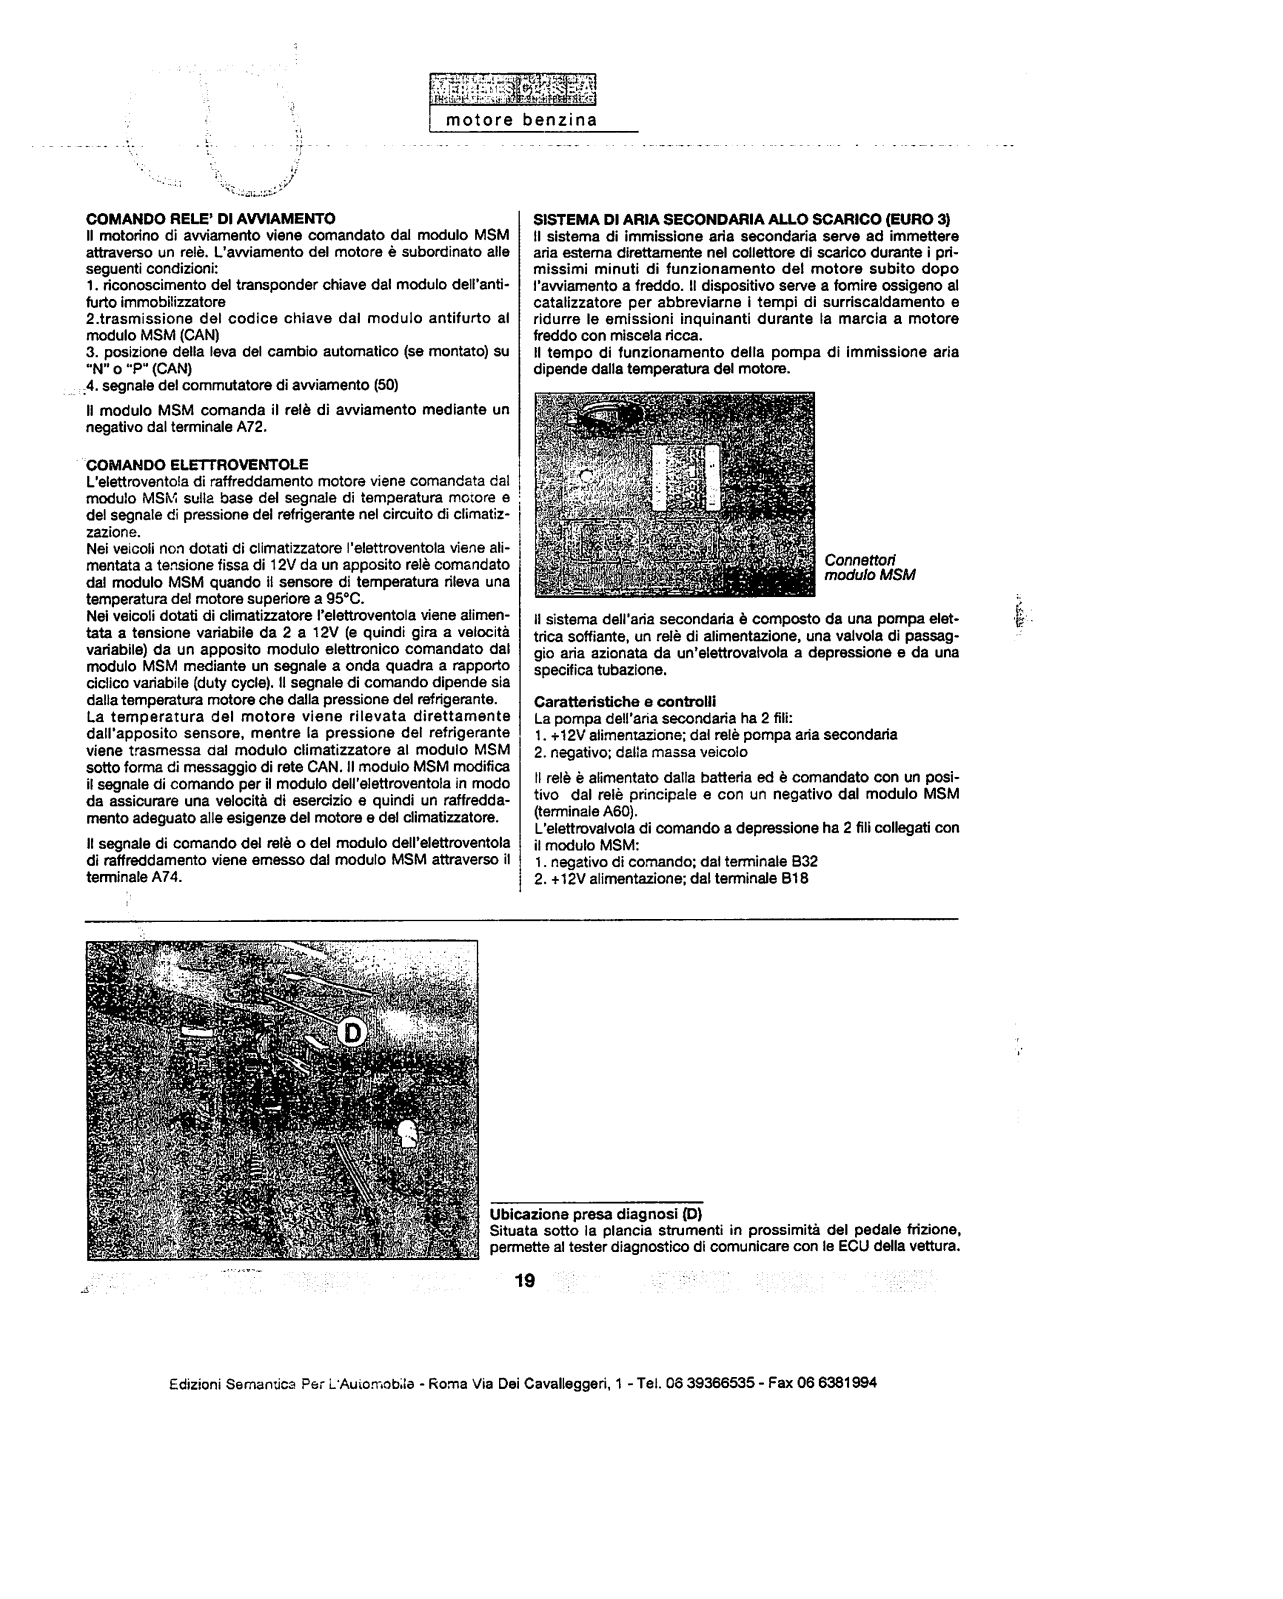 (W168): Manual técnico - tudo sobre - 1997 a 2004 - italiano 5mbxc2